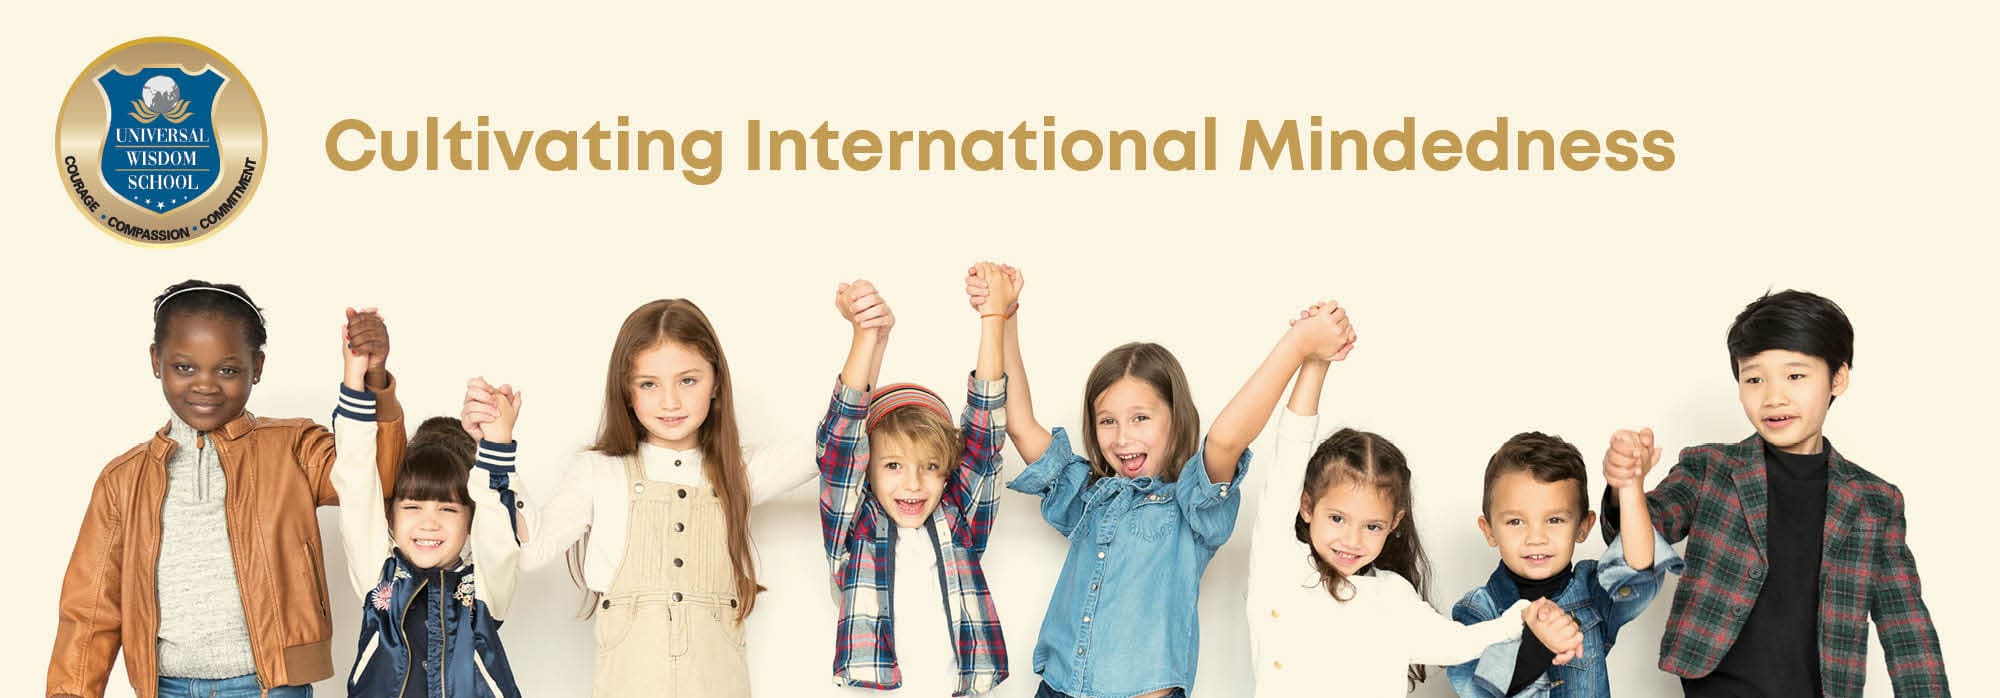 Cultivating International Mindedness